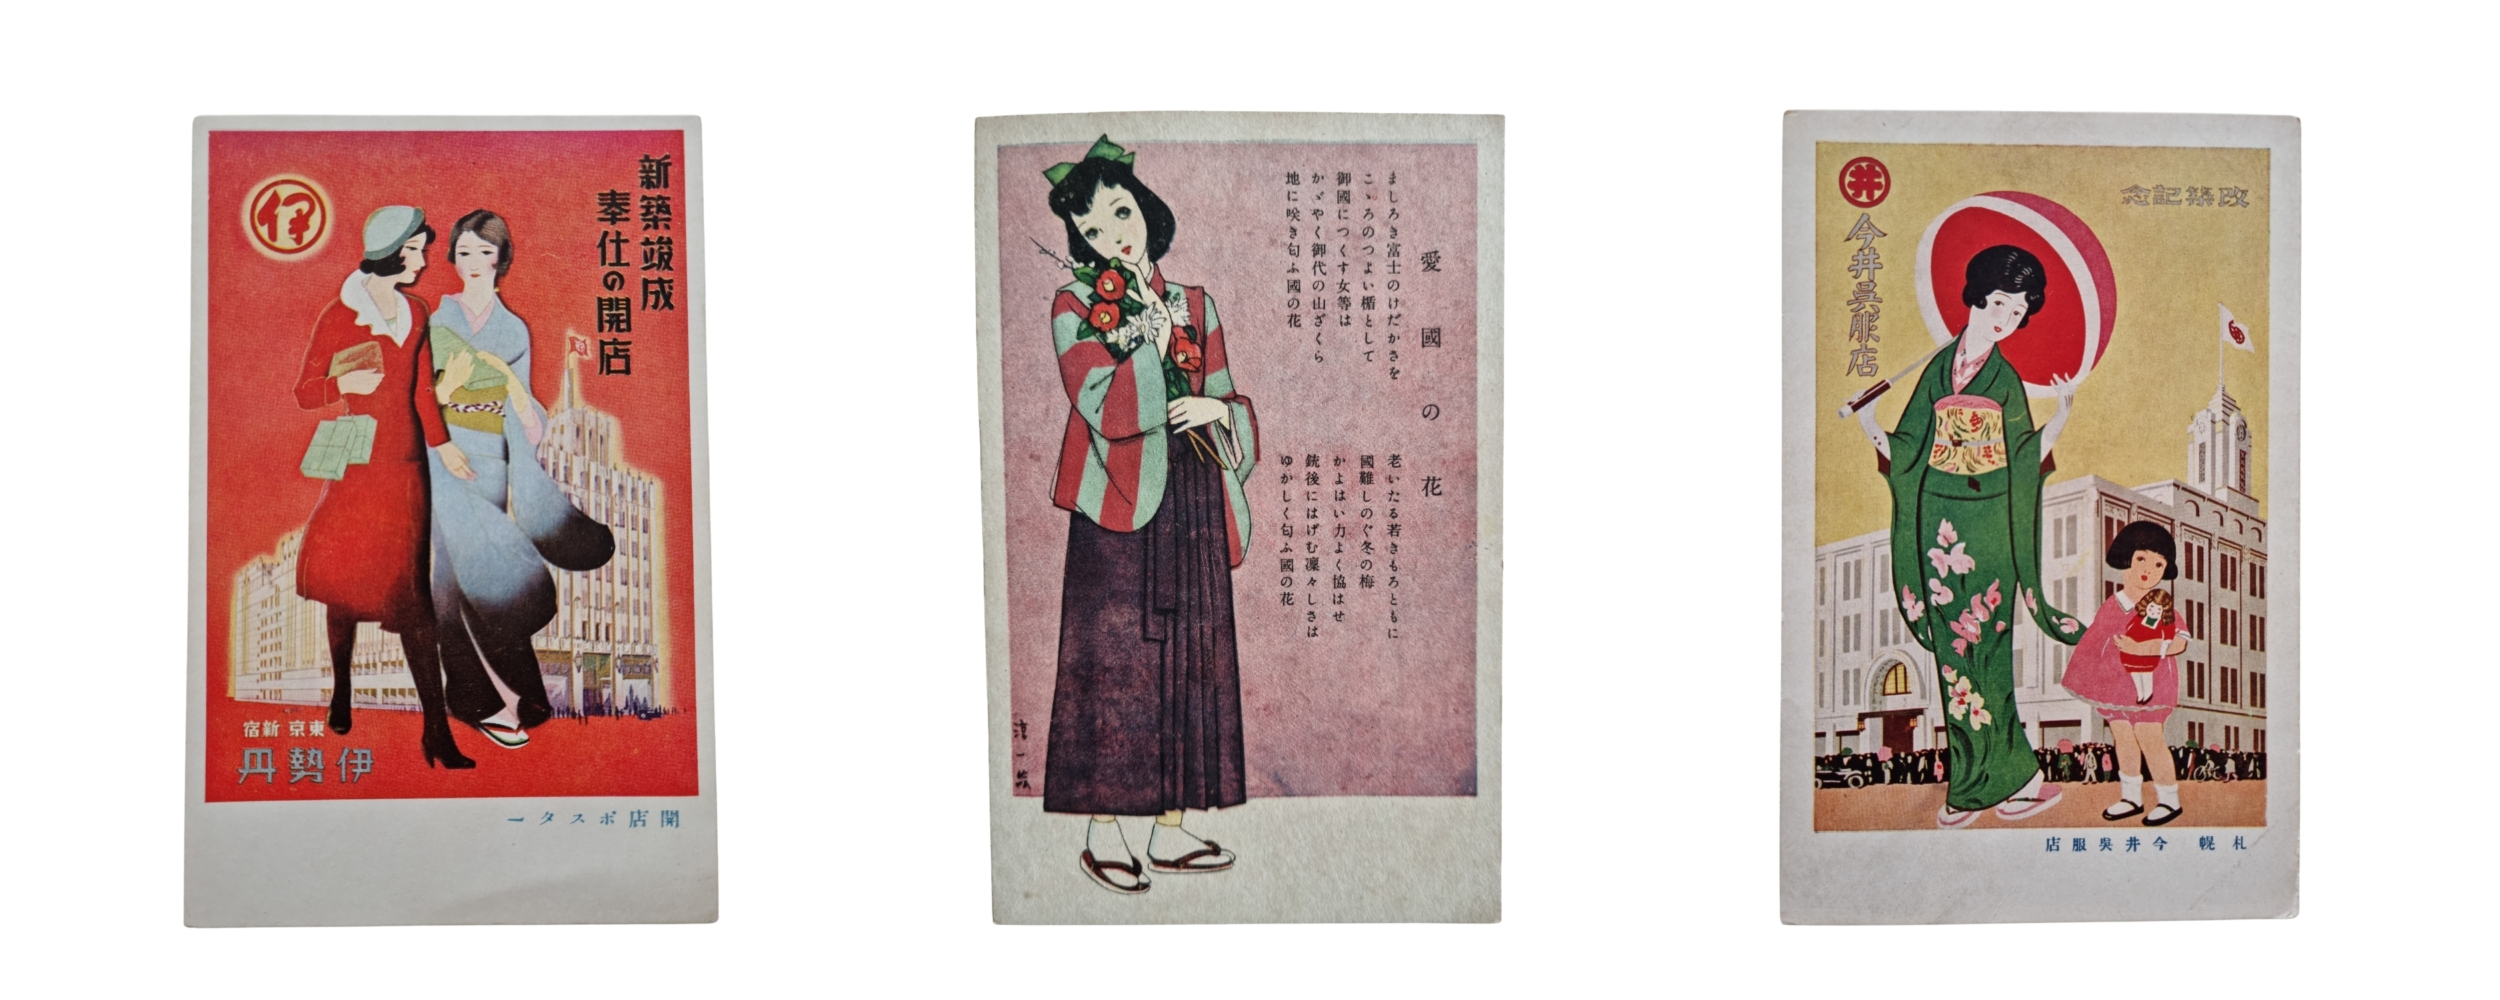 Kimono website banners 2